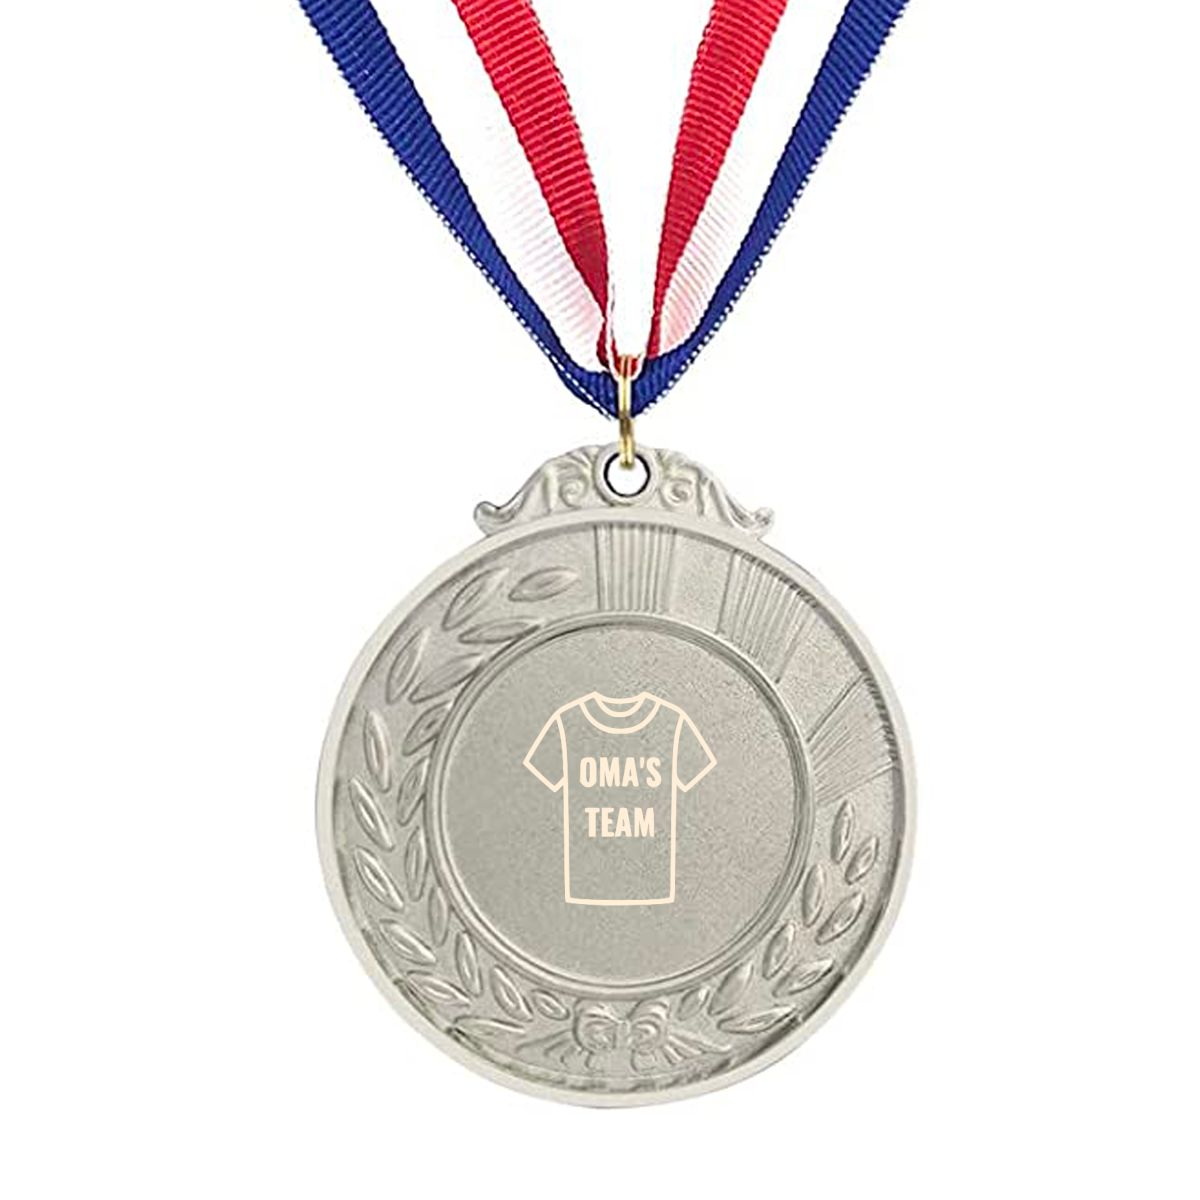 oma's team medaille 🥇🥈🥉